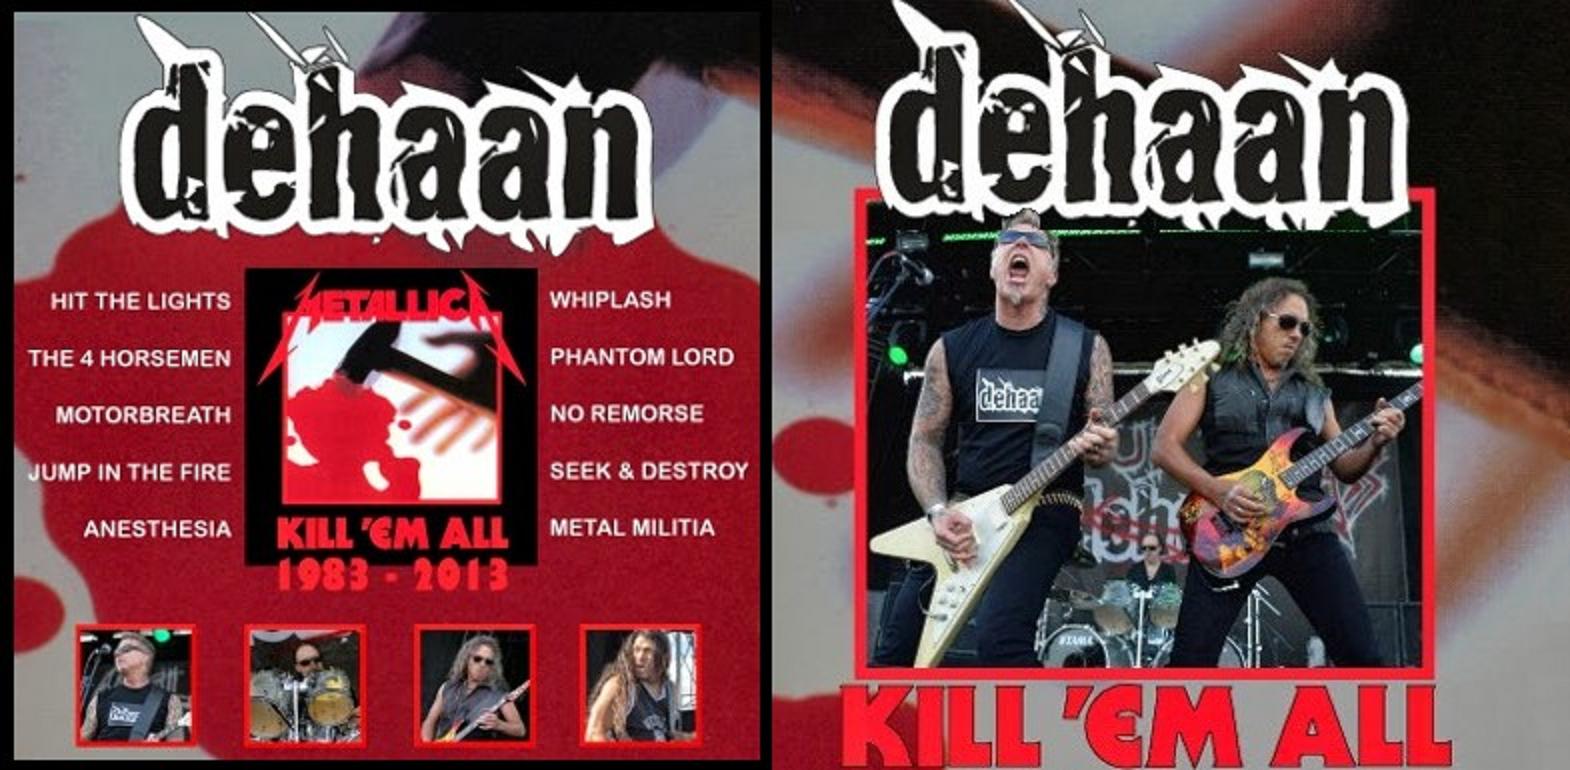 2013-06-08-Kill_em_all_live_Detroit_Deehan-front